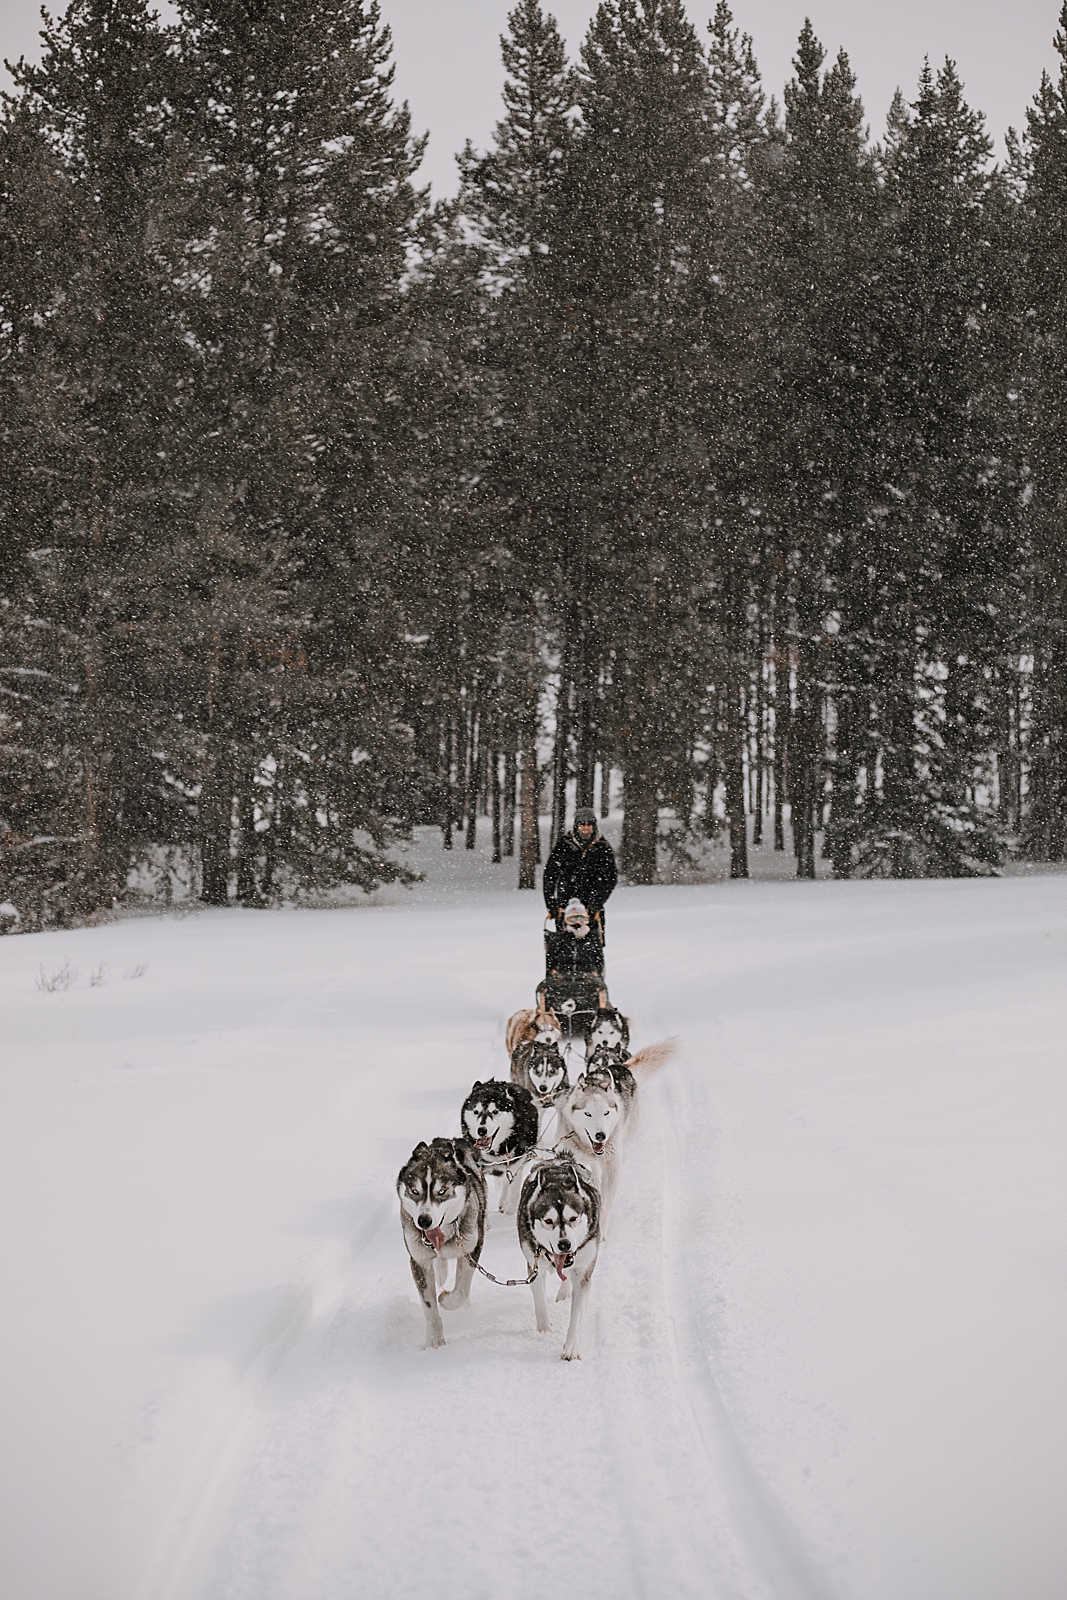 siberian husky in the snow, sled dog, dogsledding, winter, winter elopement, winter wedding, breckenridge colorado photographer, colorado dog sledding, dogsledding elopement, snowmobiling elopement 